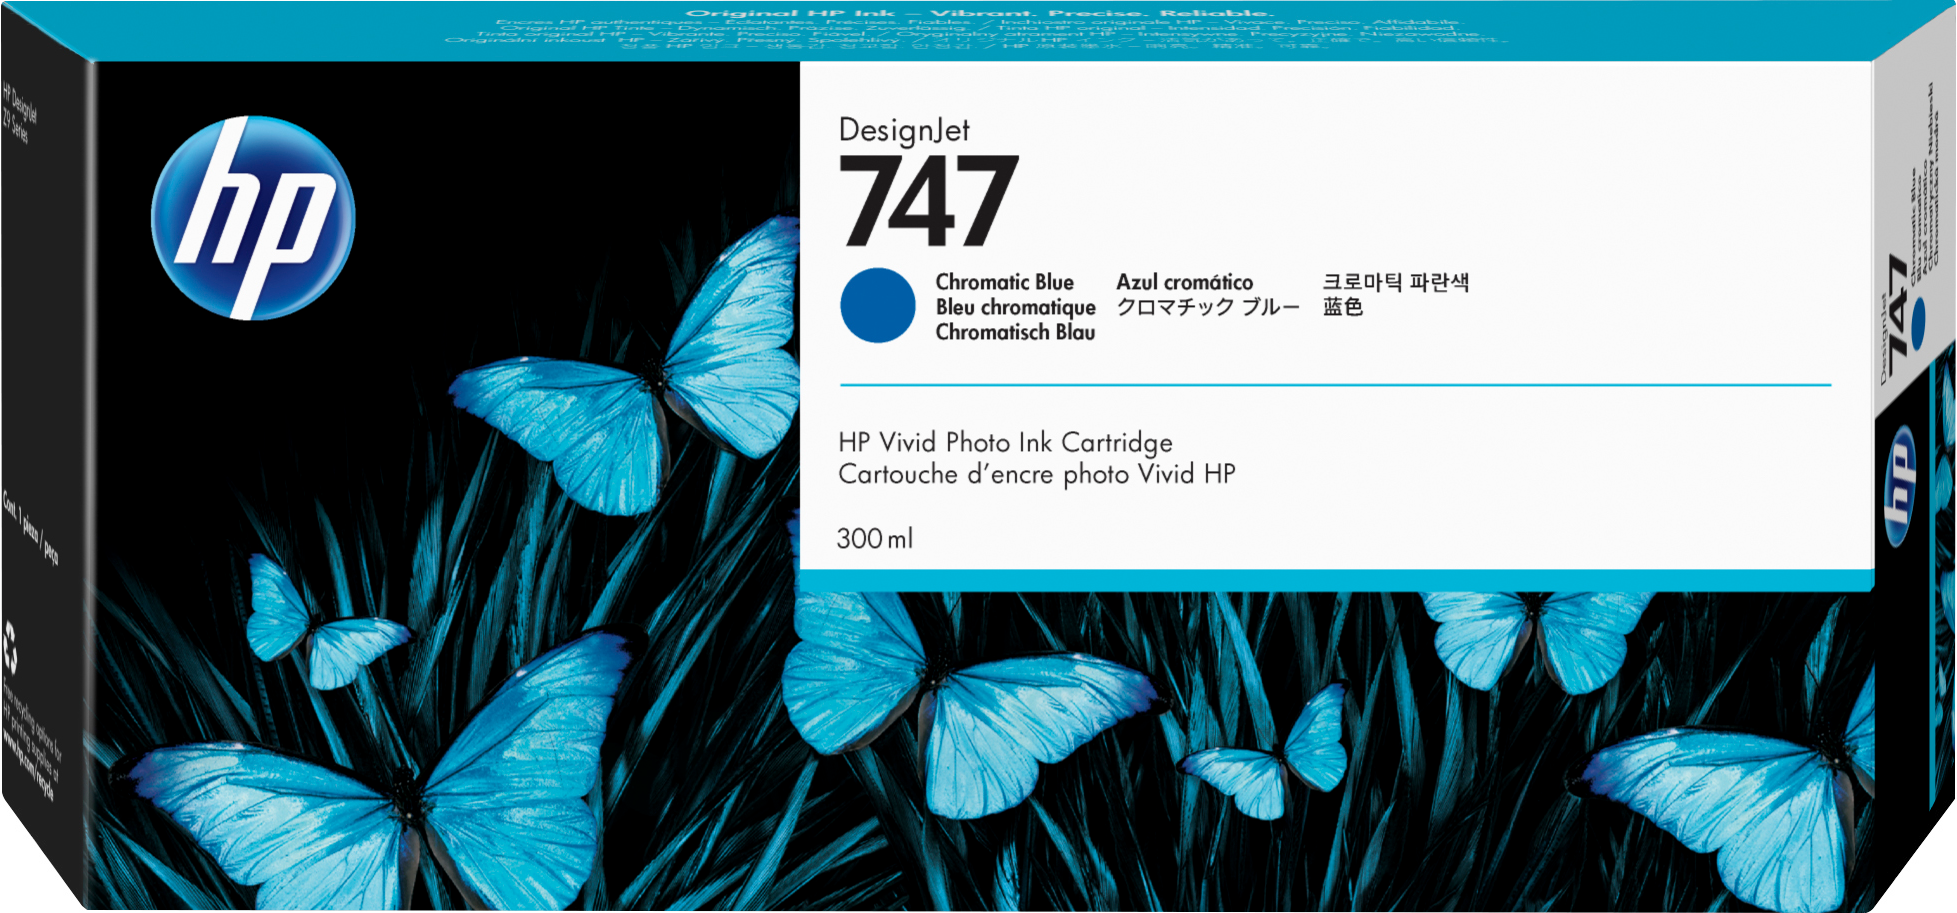 HP 747 chromatisch blauwe DesignJet inktcartridge, 300 ml single pack